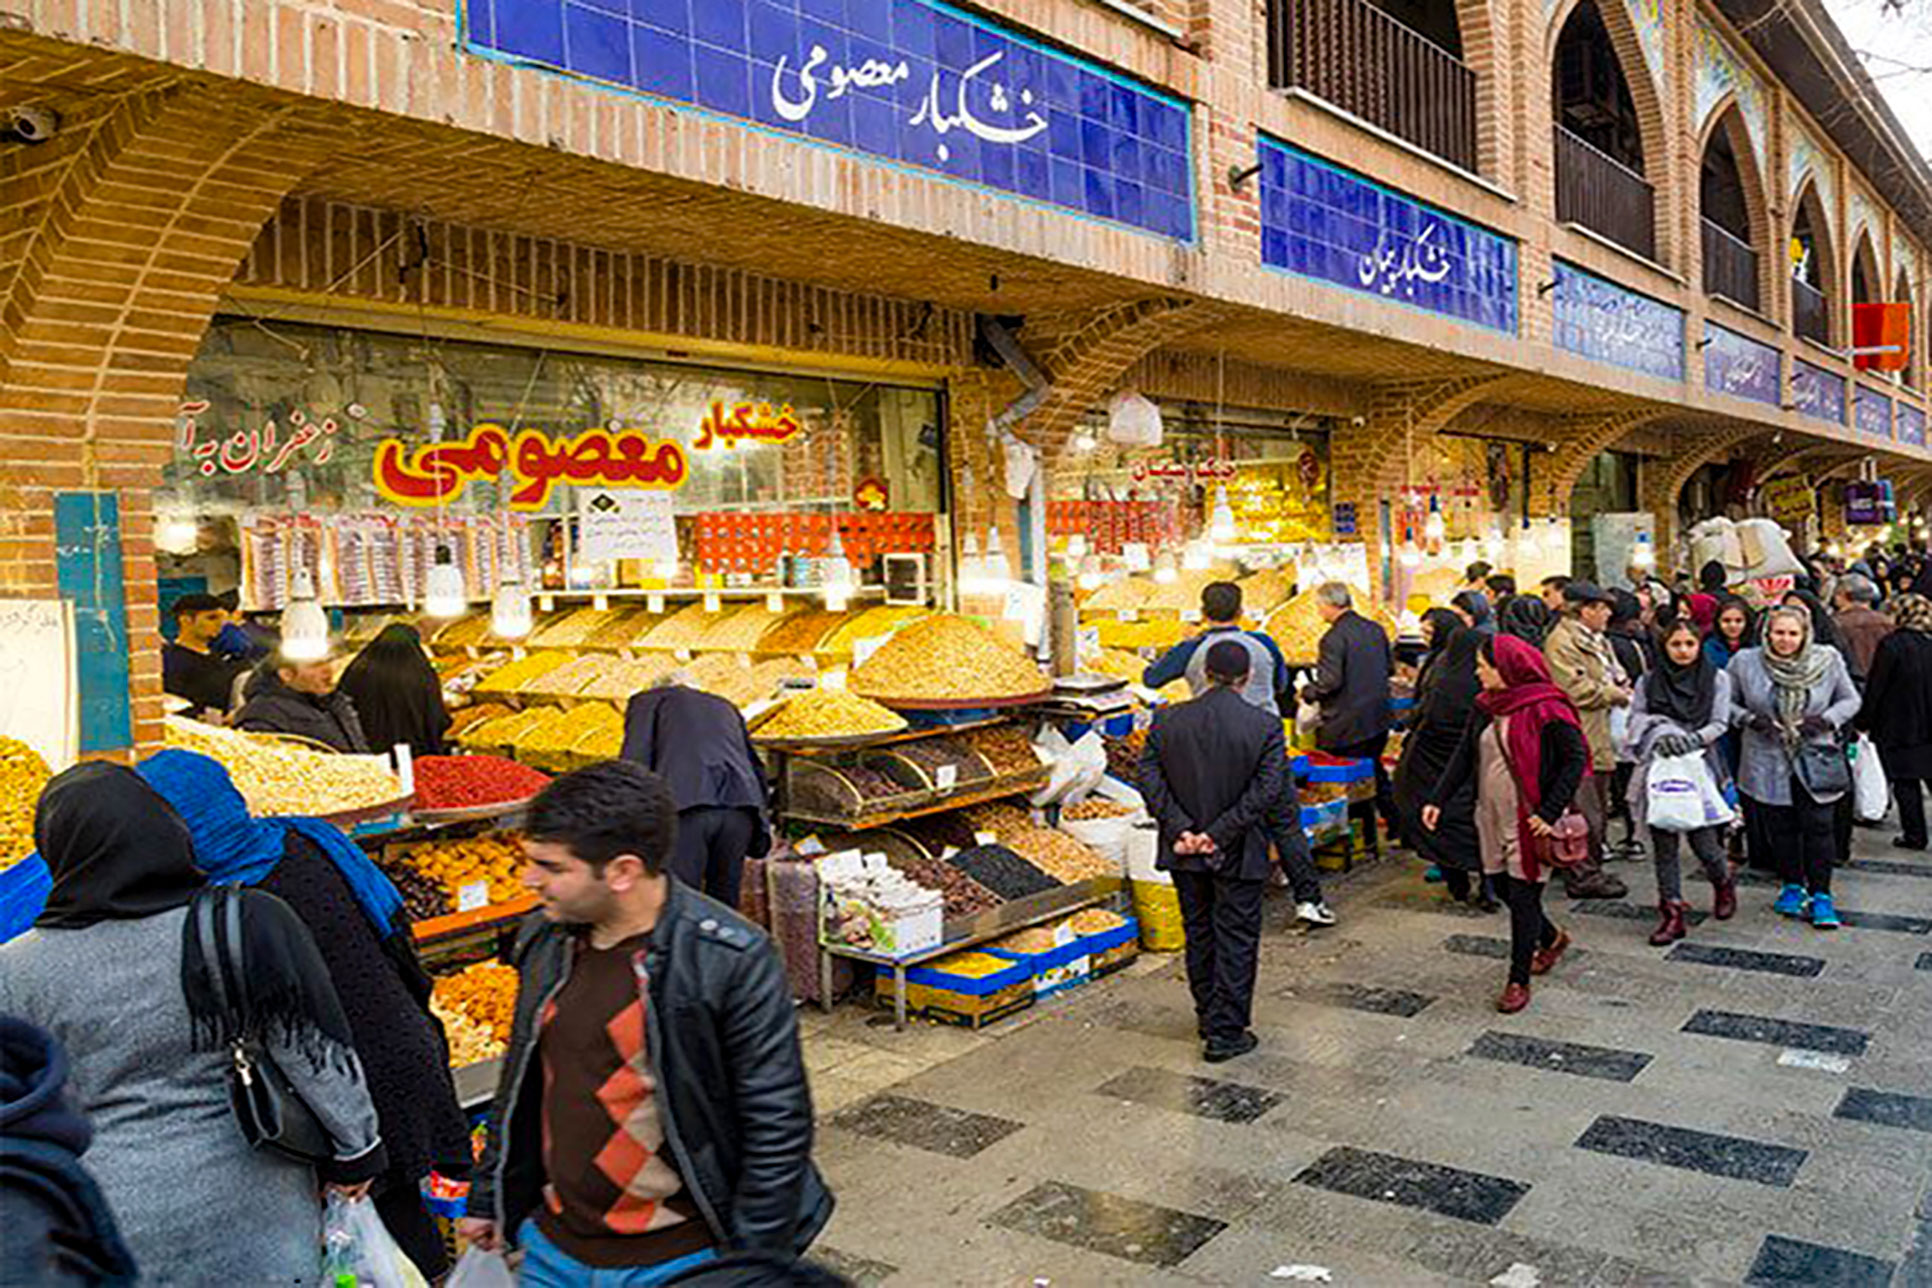 Tehran Grand bazaar - The history of bazaars in Iran